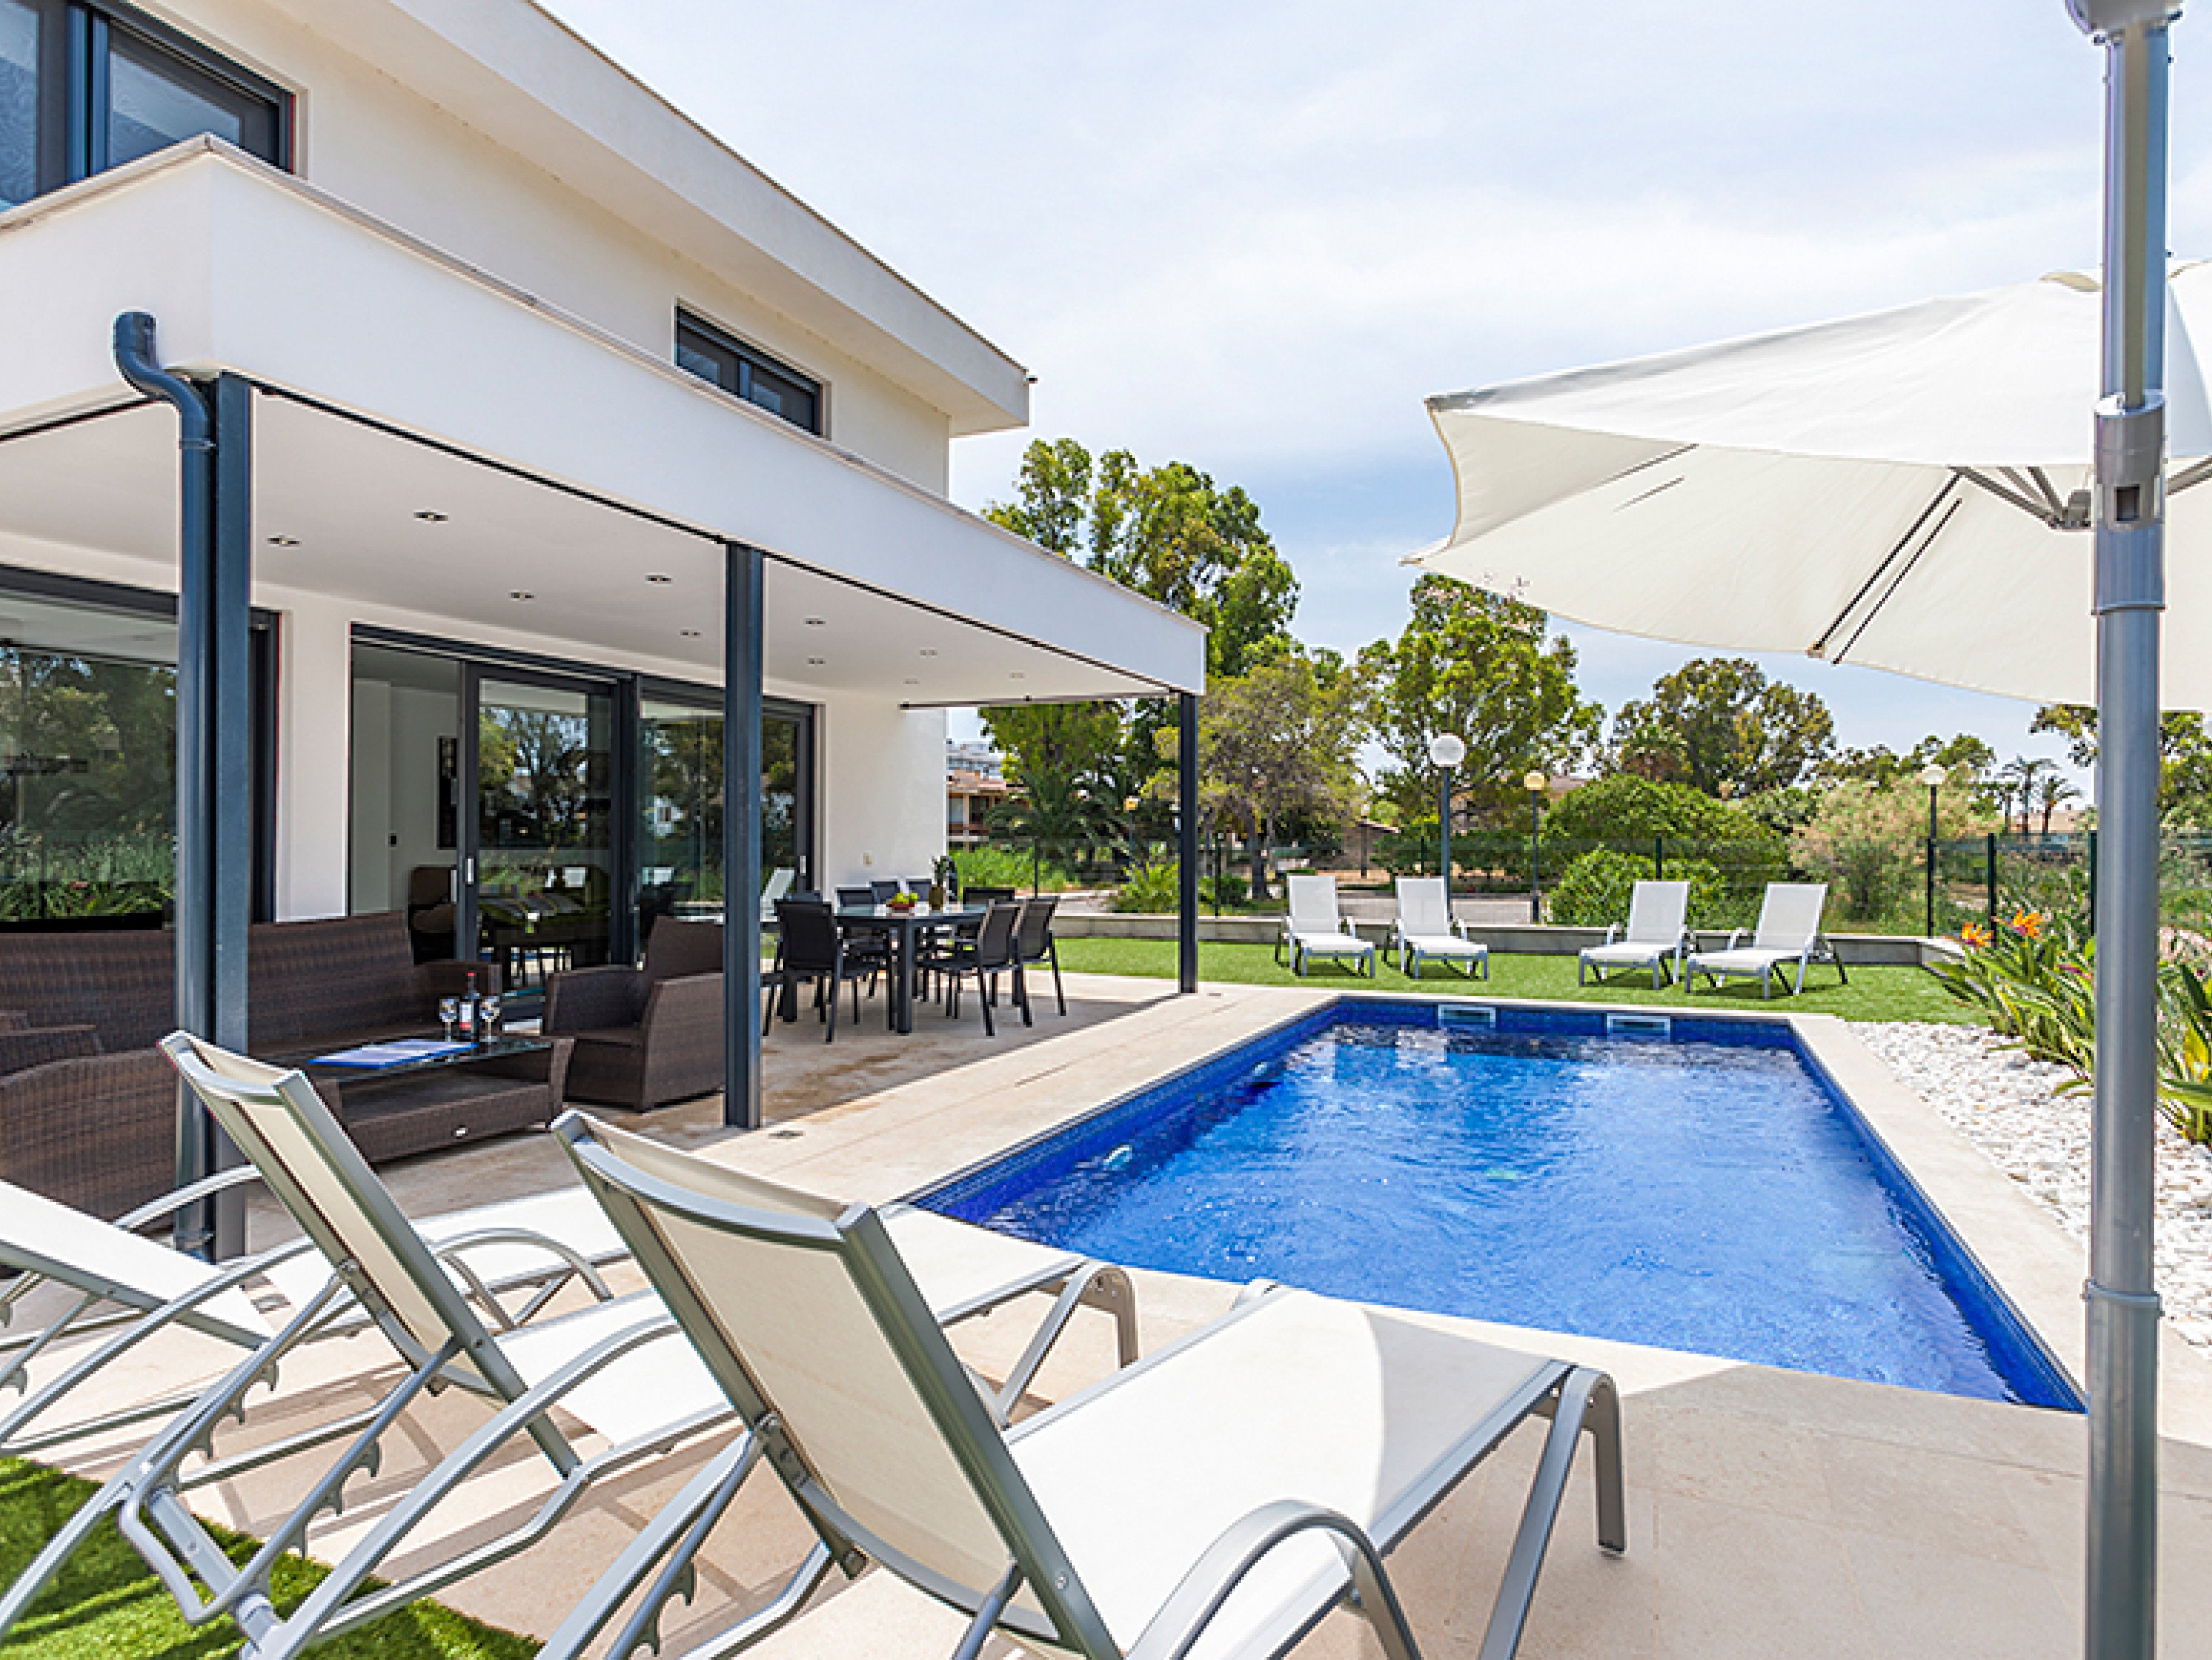 Cosins - Majorca holiday villas with pools